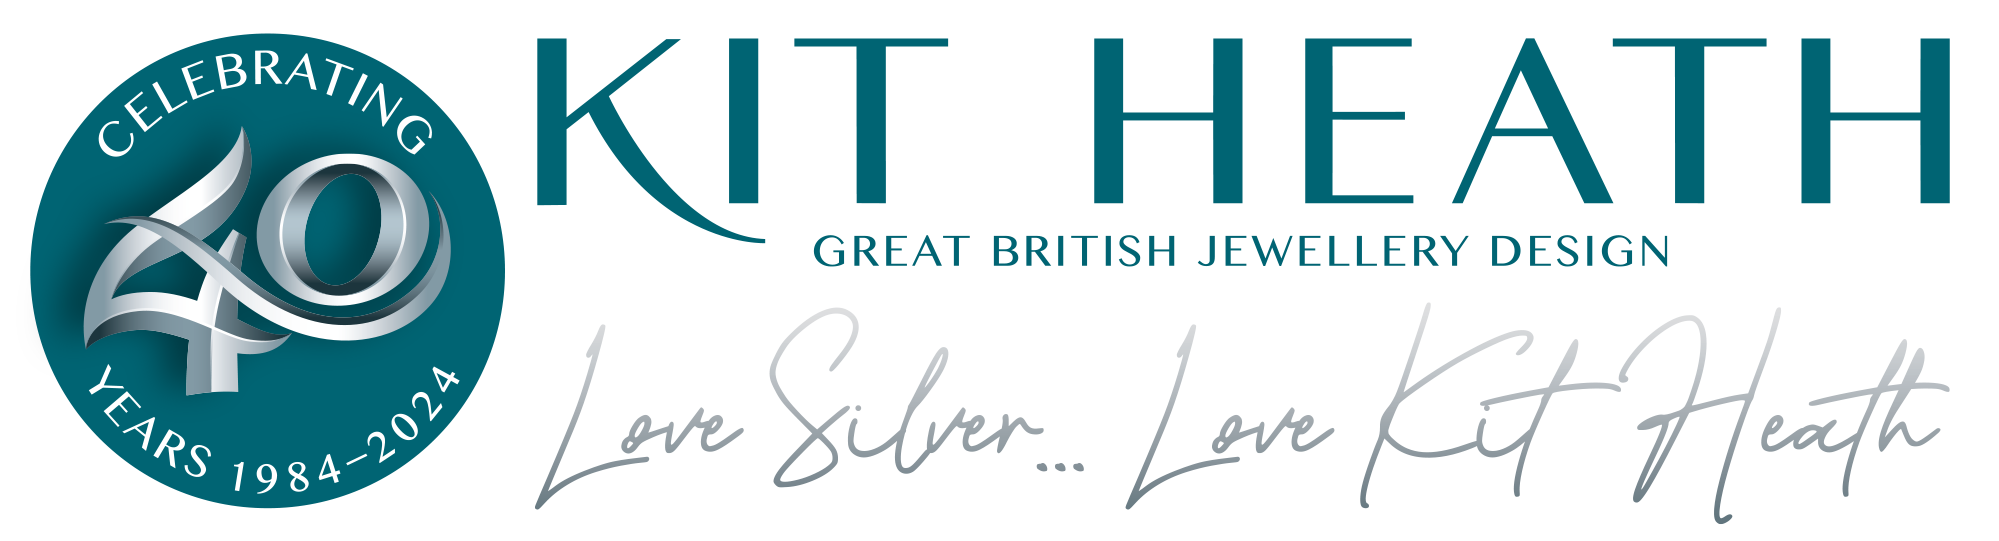 Kit Heath | Great British Jewellery Design | Celebrating 40 Years 1984-2024